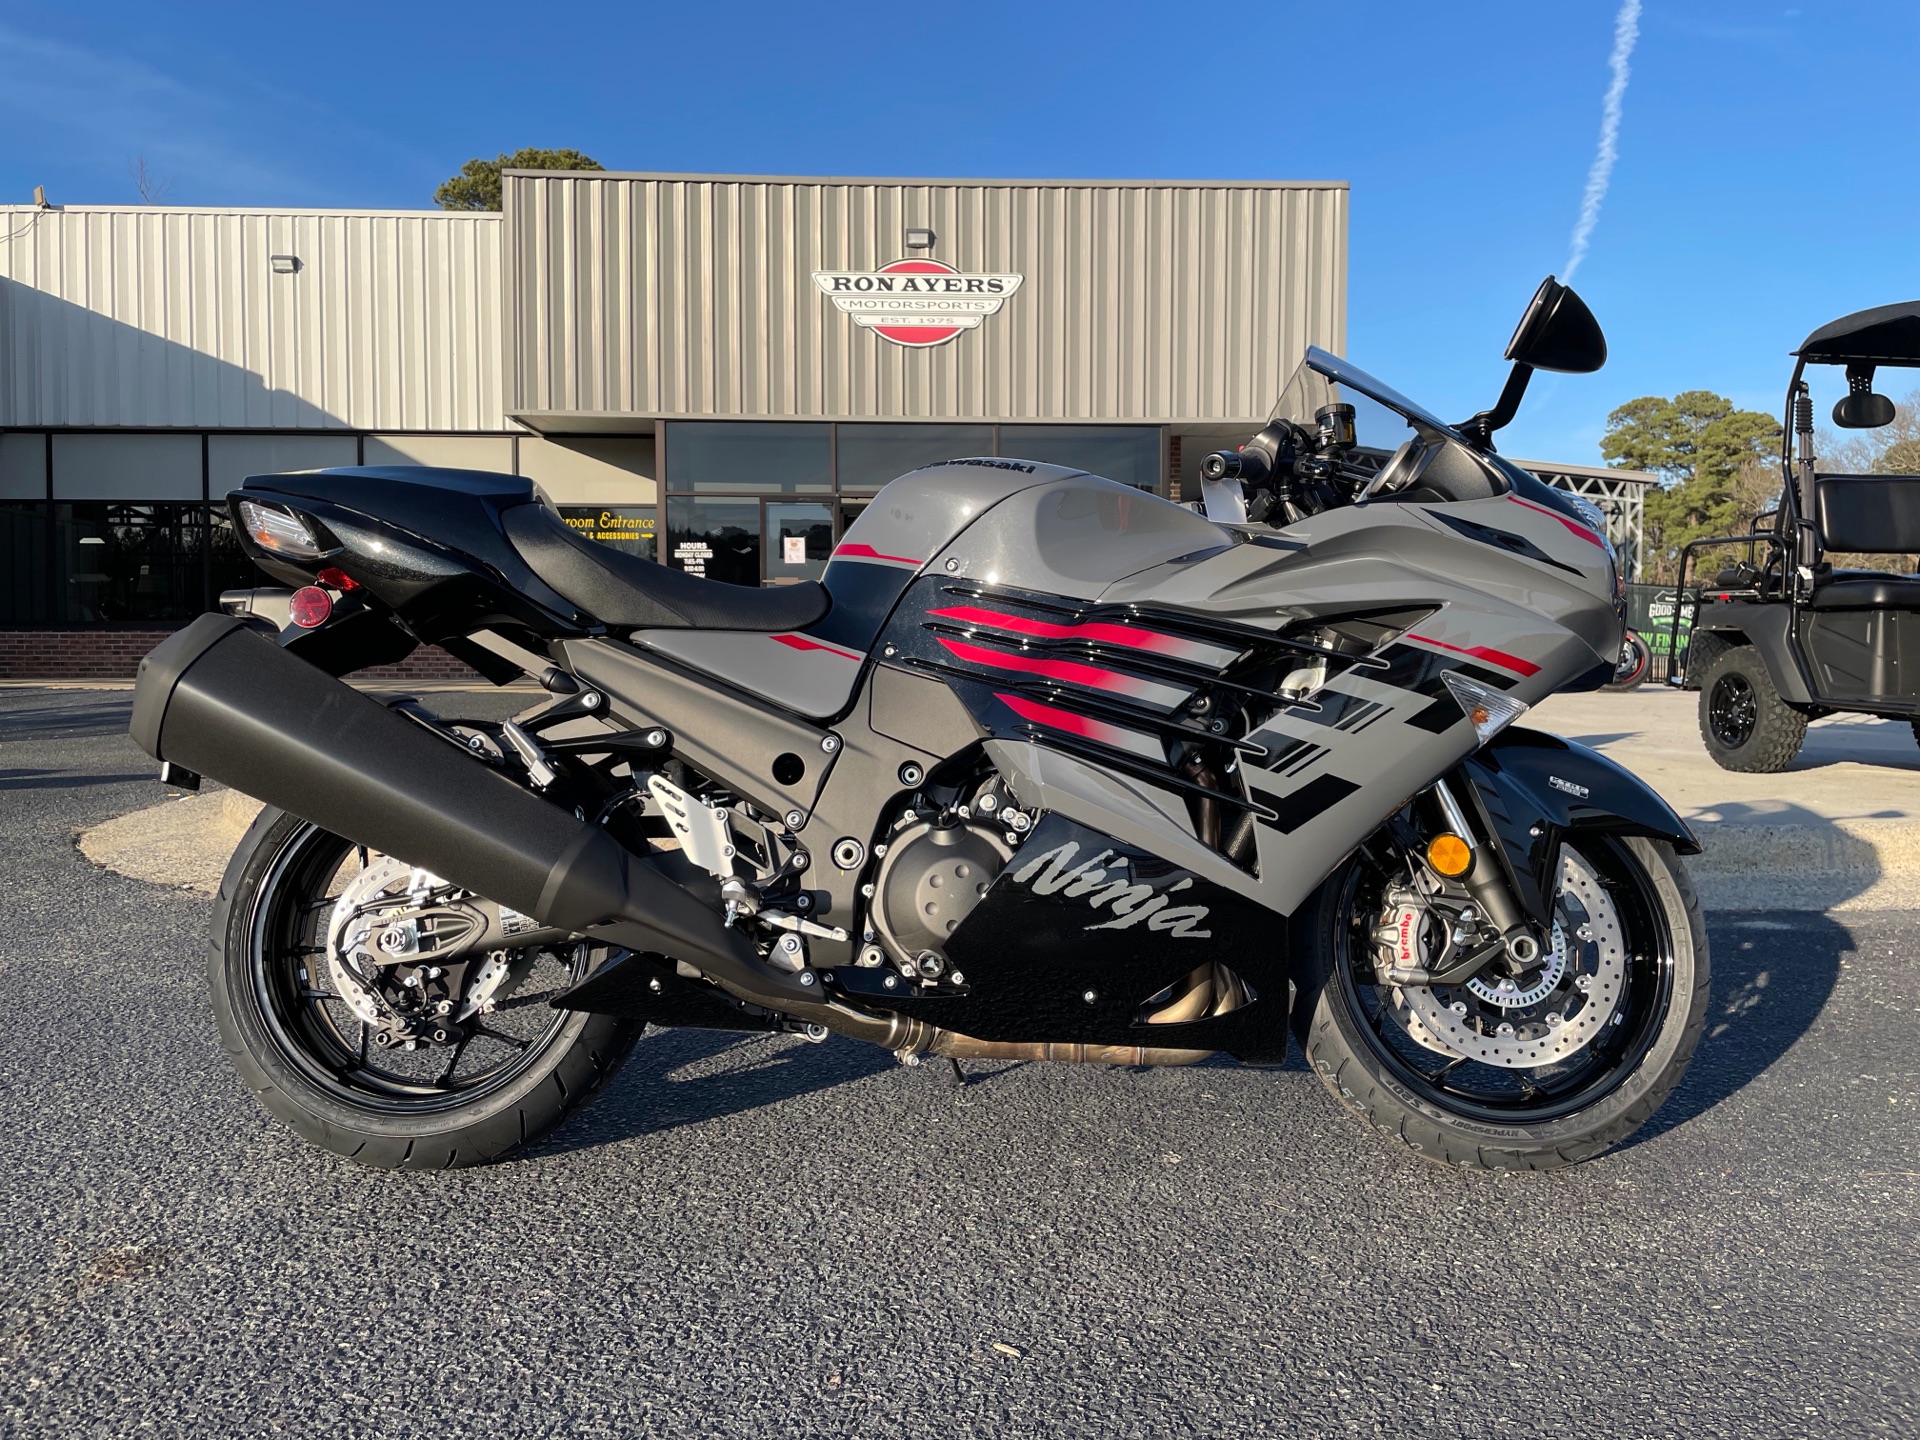 New 2022 Kawasaki Ninja ZX-14R ABS Motorcycles in Greenville, NC | Stock  Number: N/A